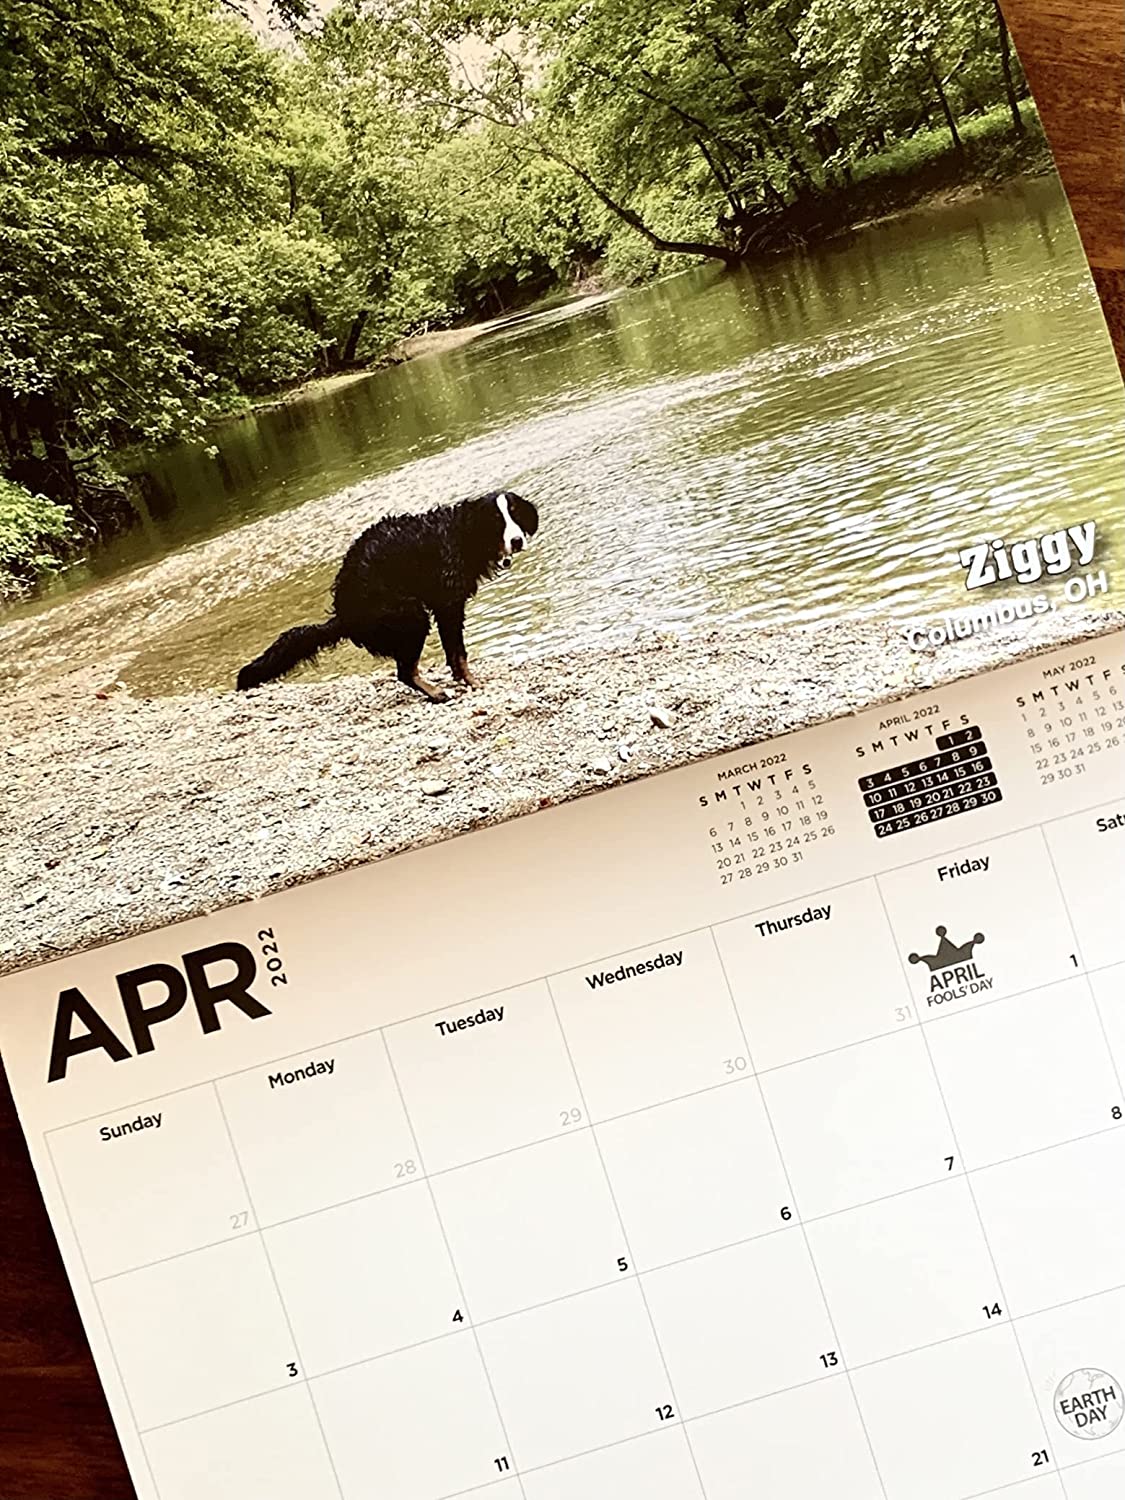 Pooping Dogs Calendar 2022